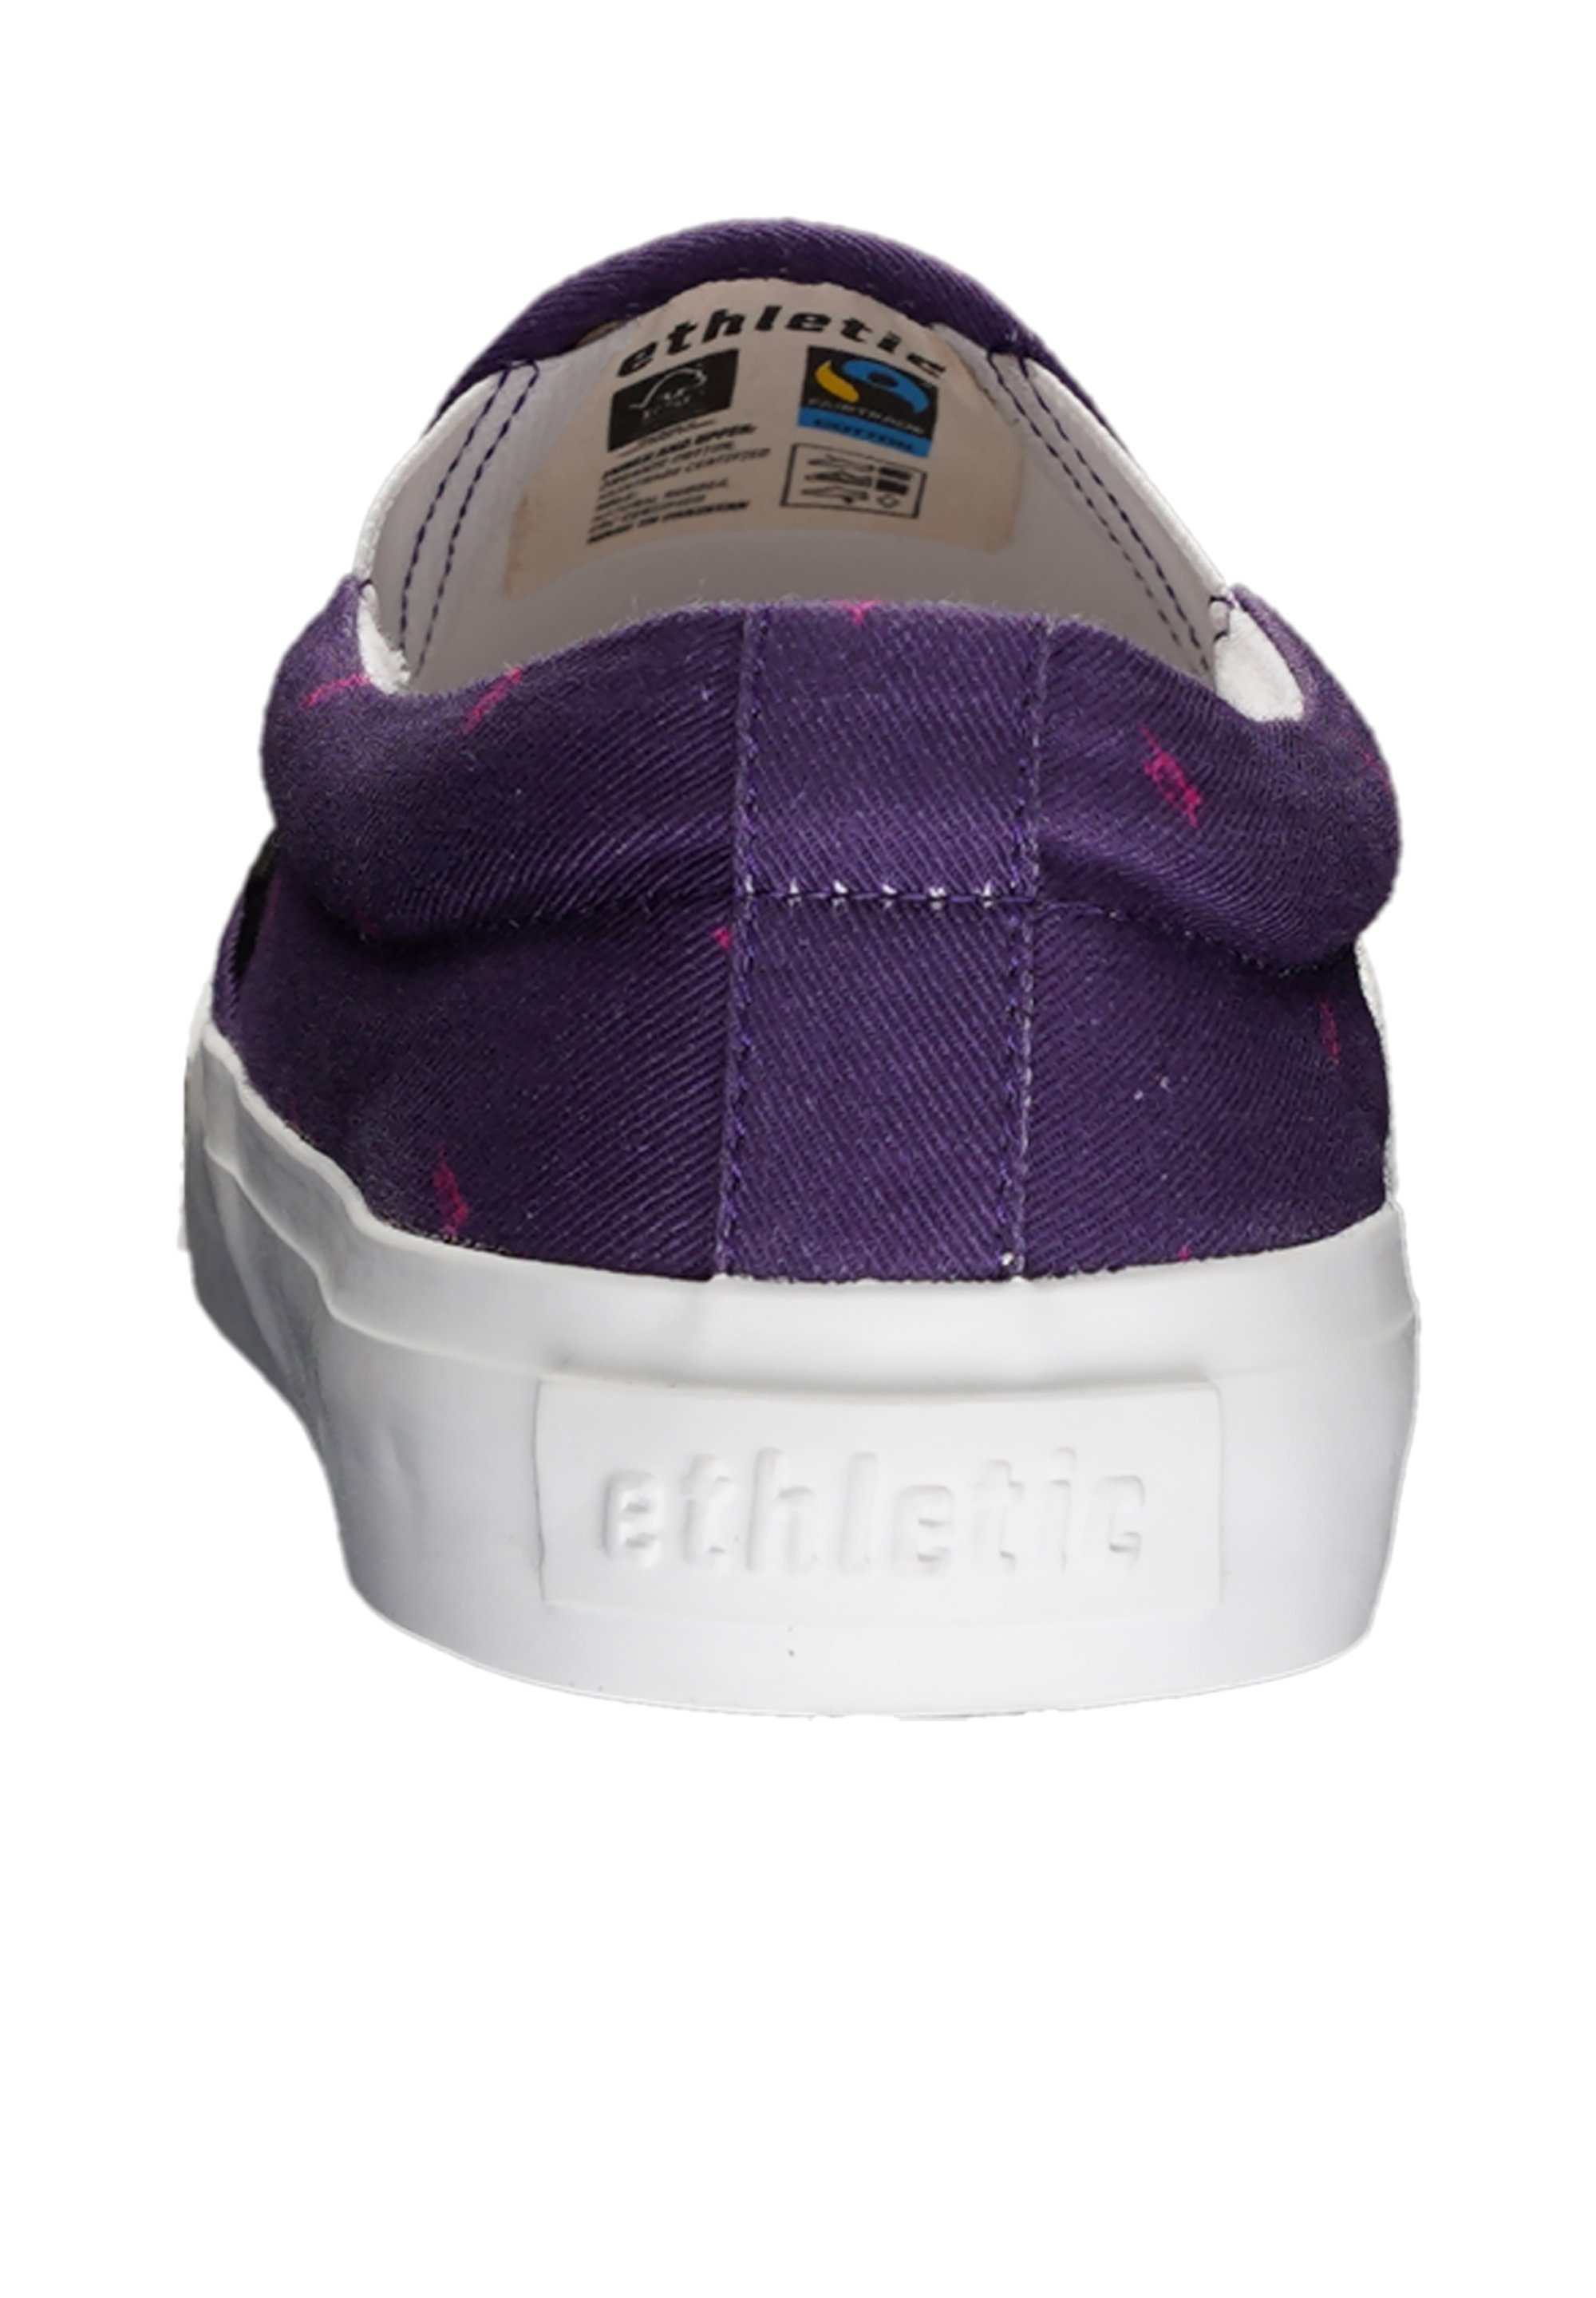 Fair, snow Fair Sneaker Collection Nachhaltig Vegan, purple leopard Deck ETHLETIC